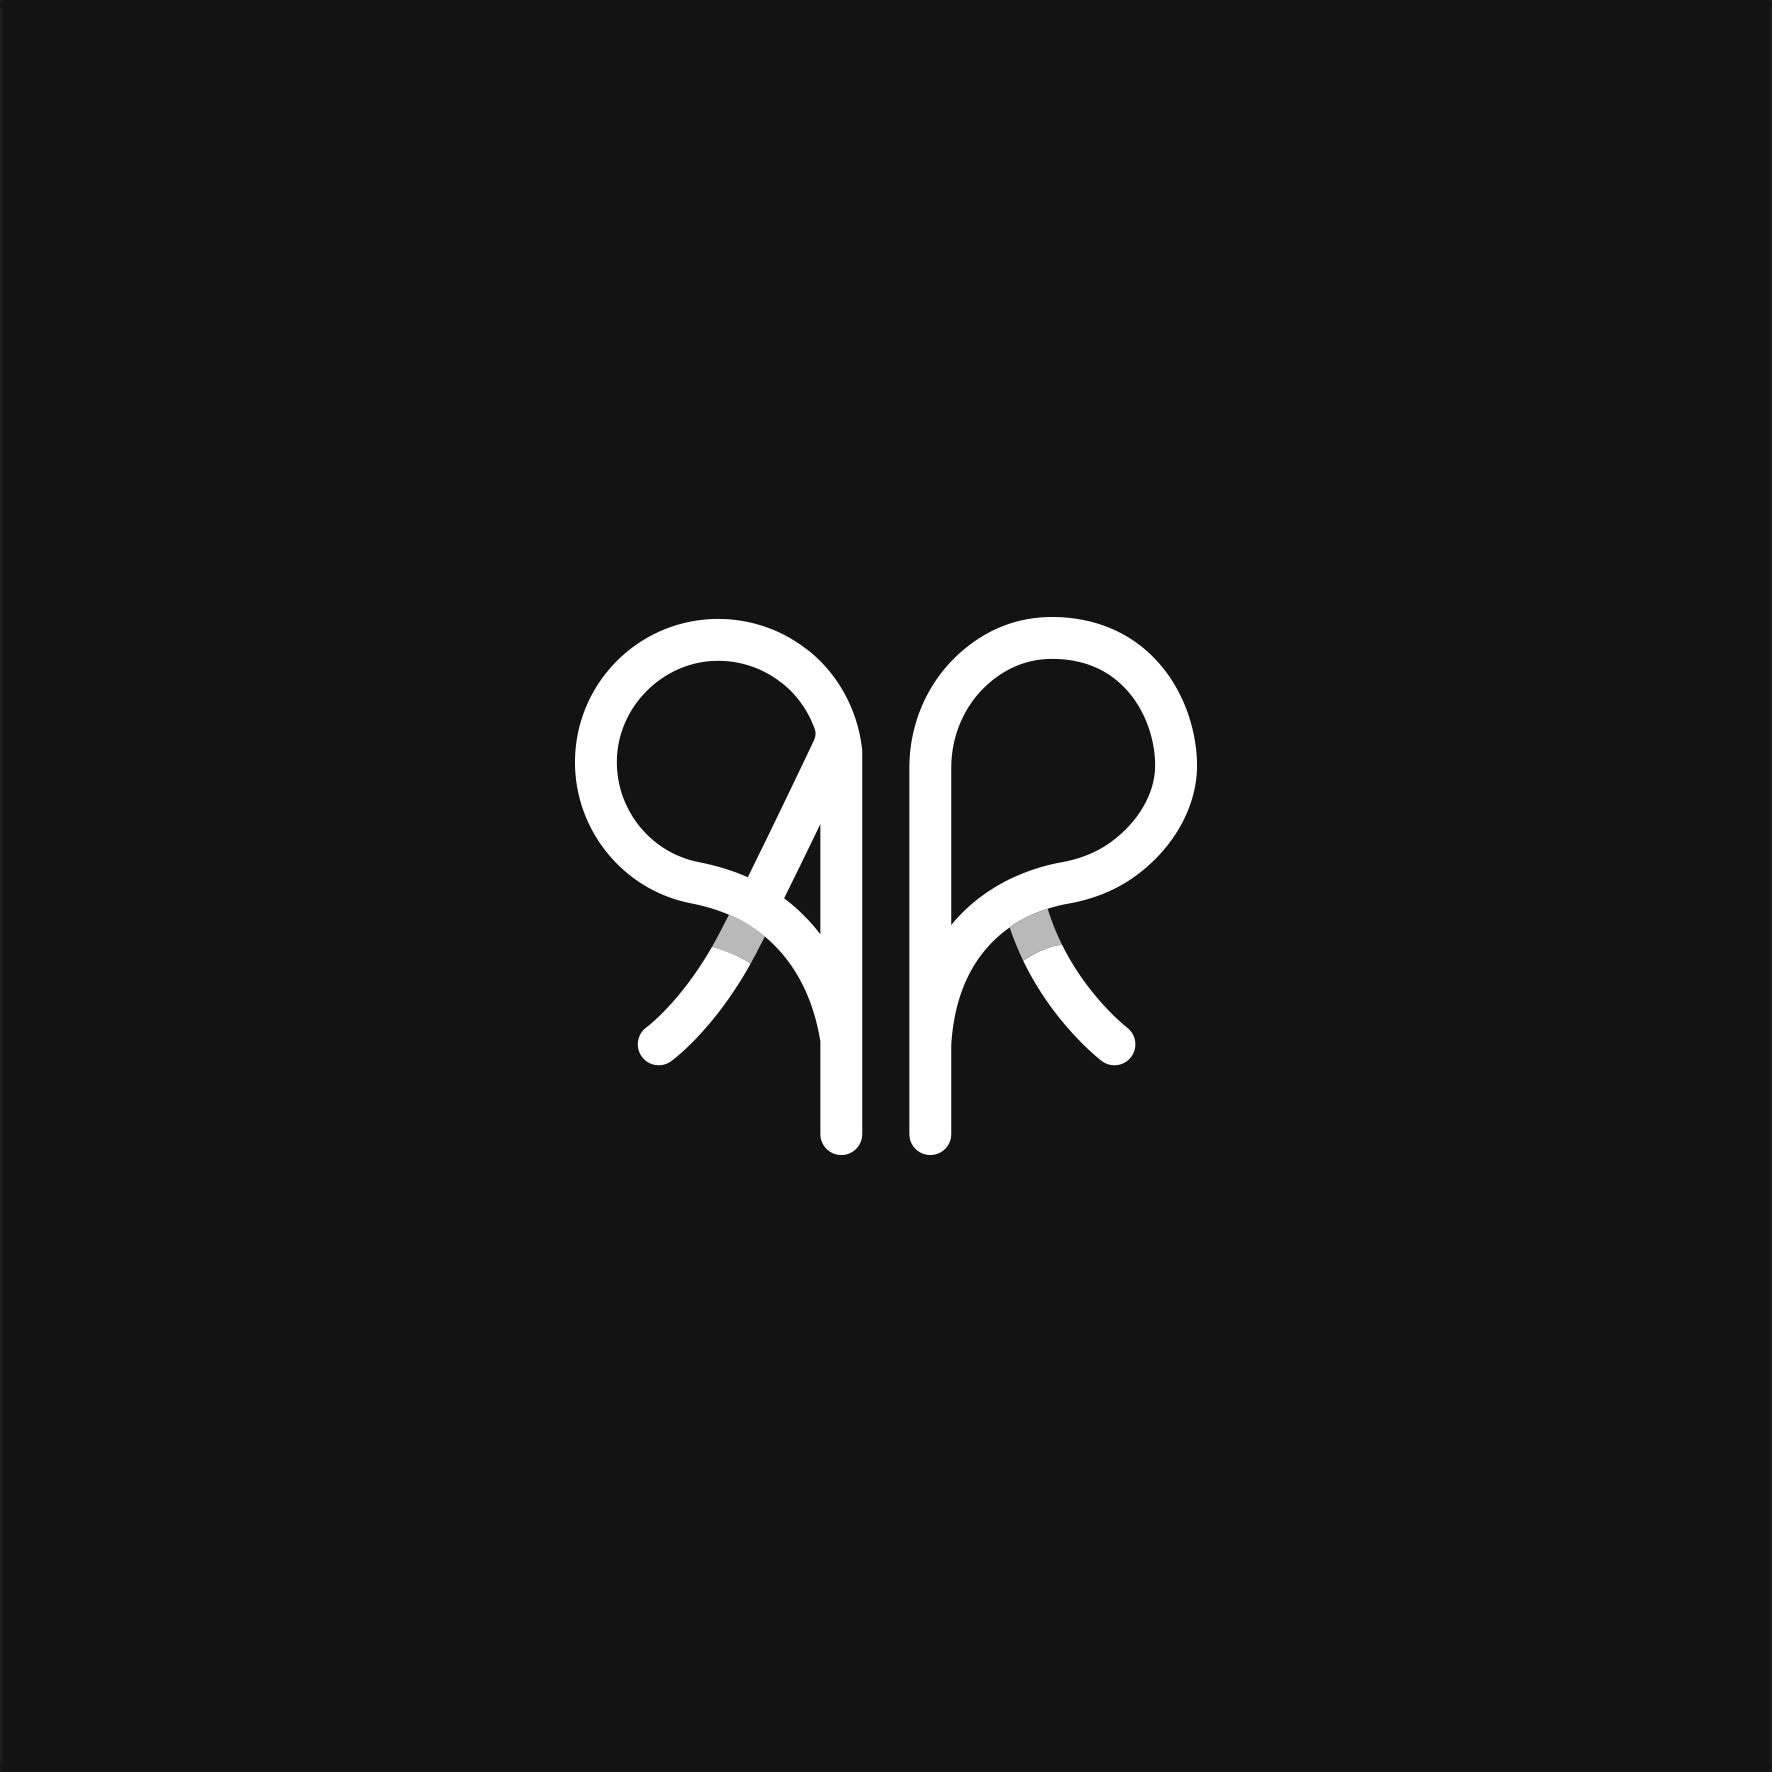 Romantic Logo - AR logo, Monogram Logo, Heart shape logo, Love logo, Romantic logo